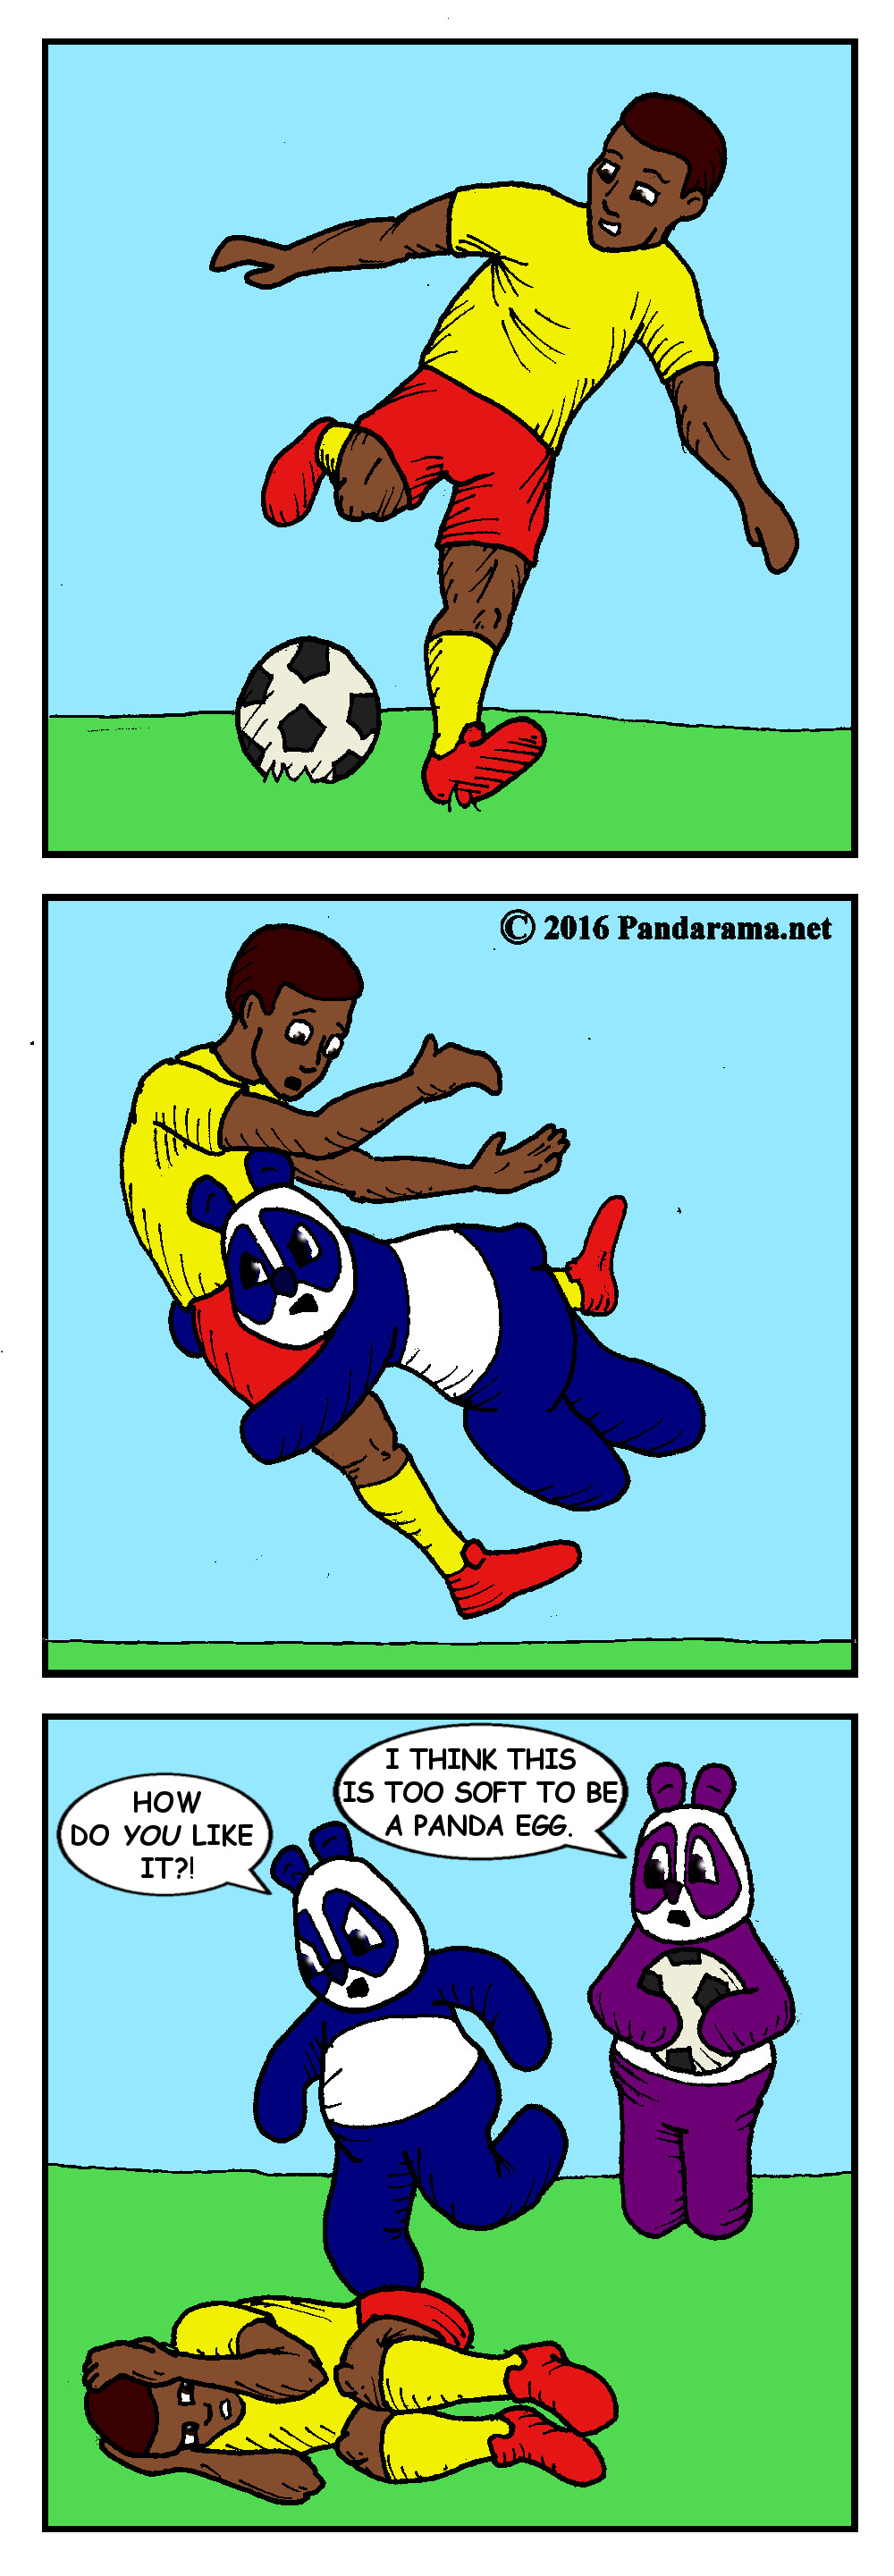 Pandarama cartoon of a panda assaulting a soccer player because the soccer ball looks like a panda egg. football. pandaegg.